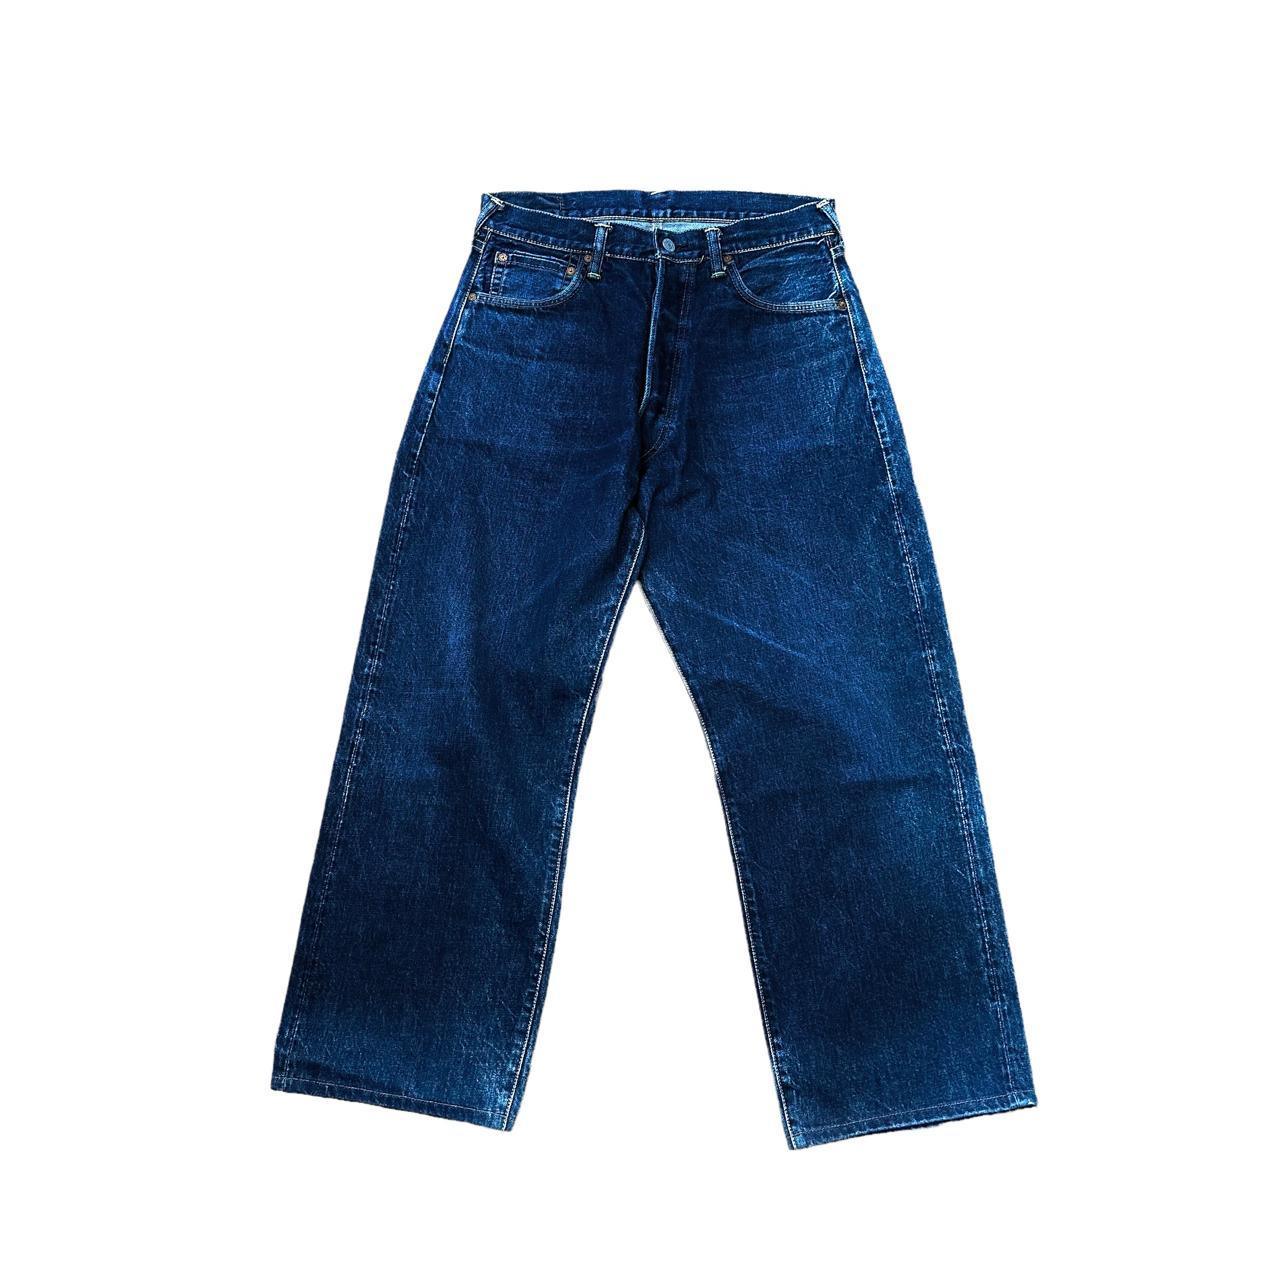 EVISU Bottom 2001/ no.2/ Red Ear/ Gull/ Denim jeans - Known Source